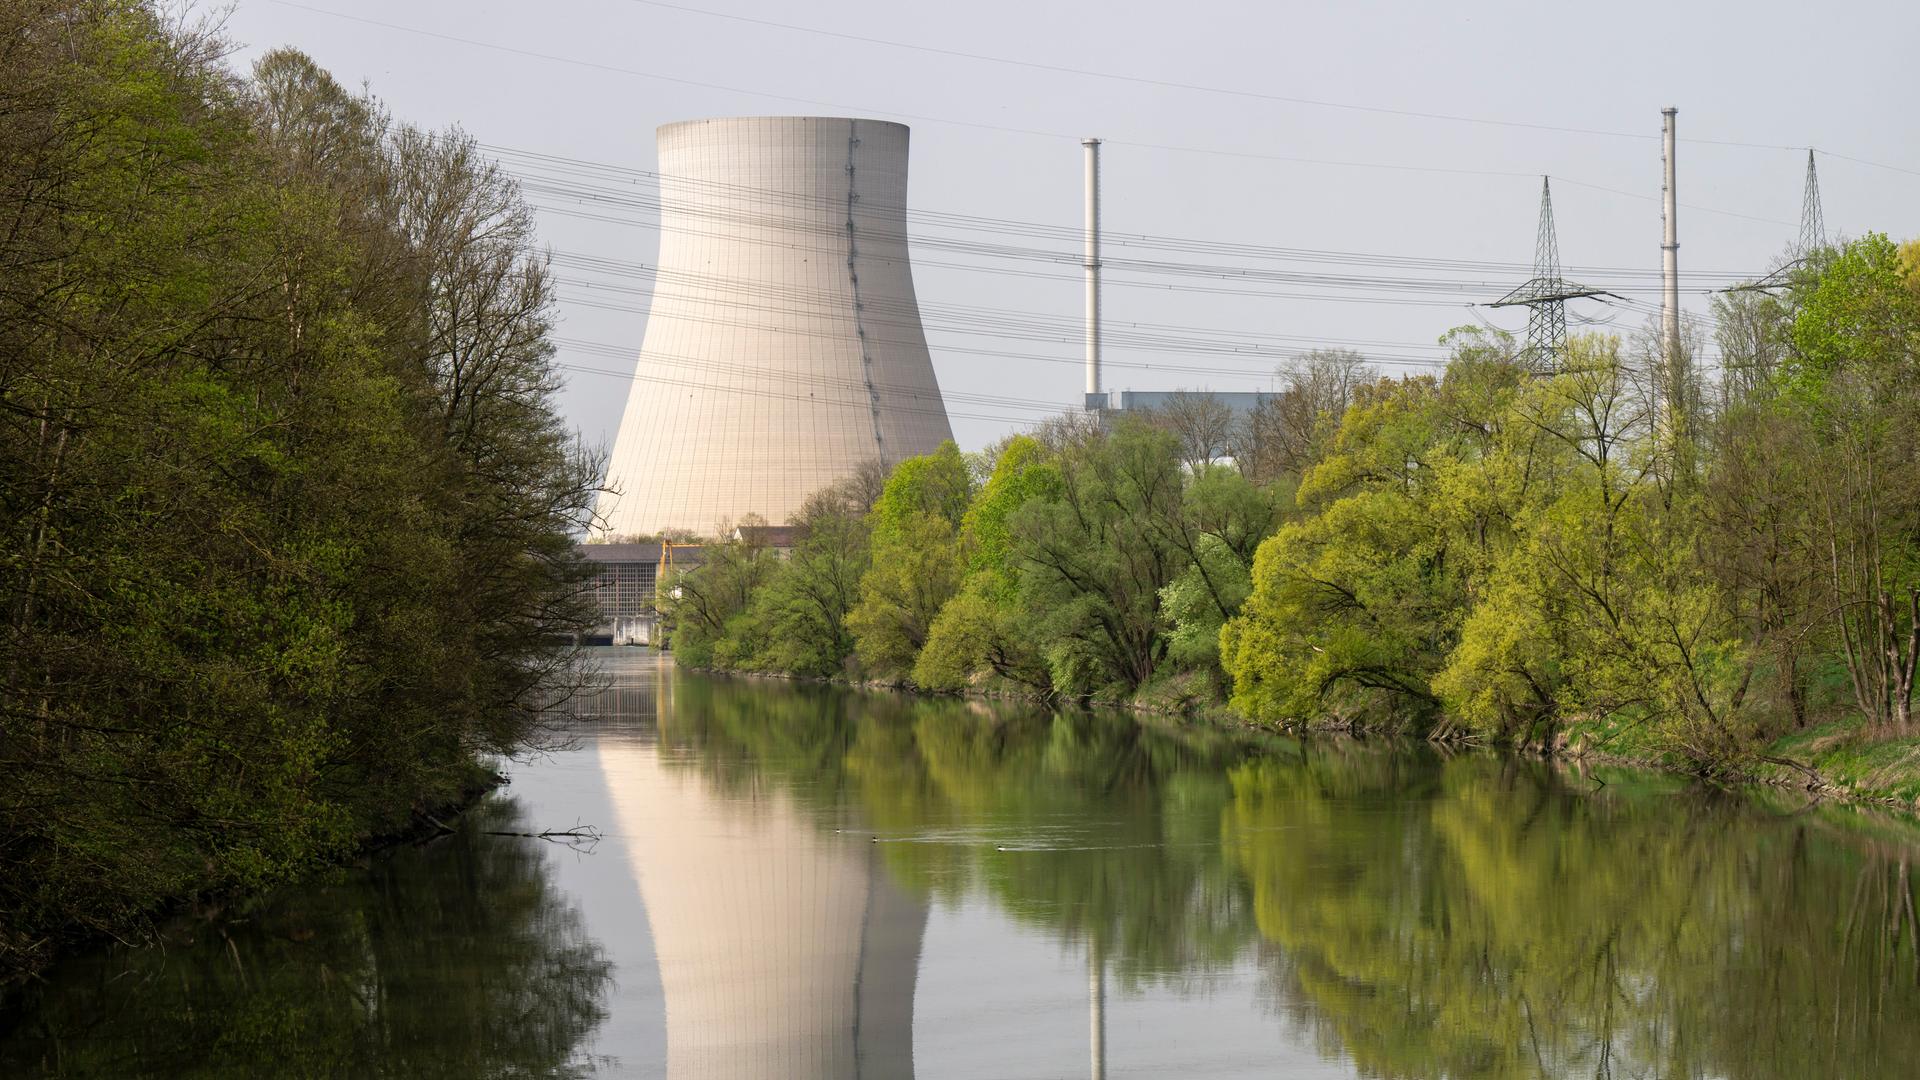 Das stillgelegte Kernkraftwerk Isar 2.